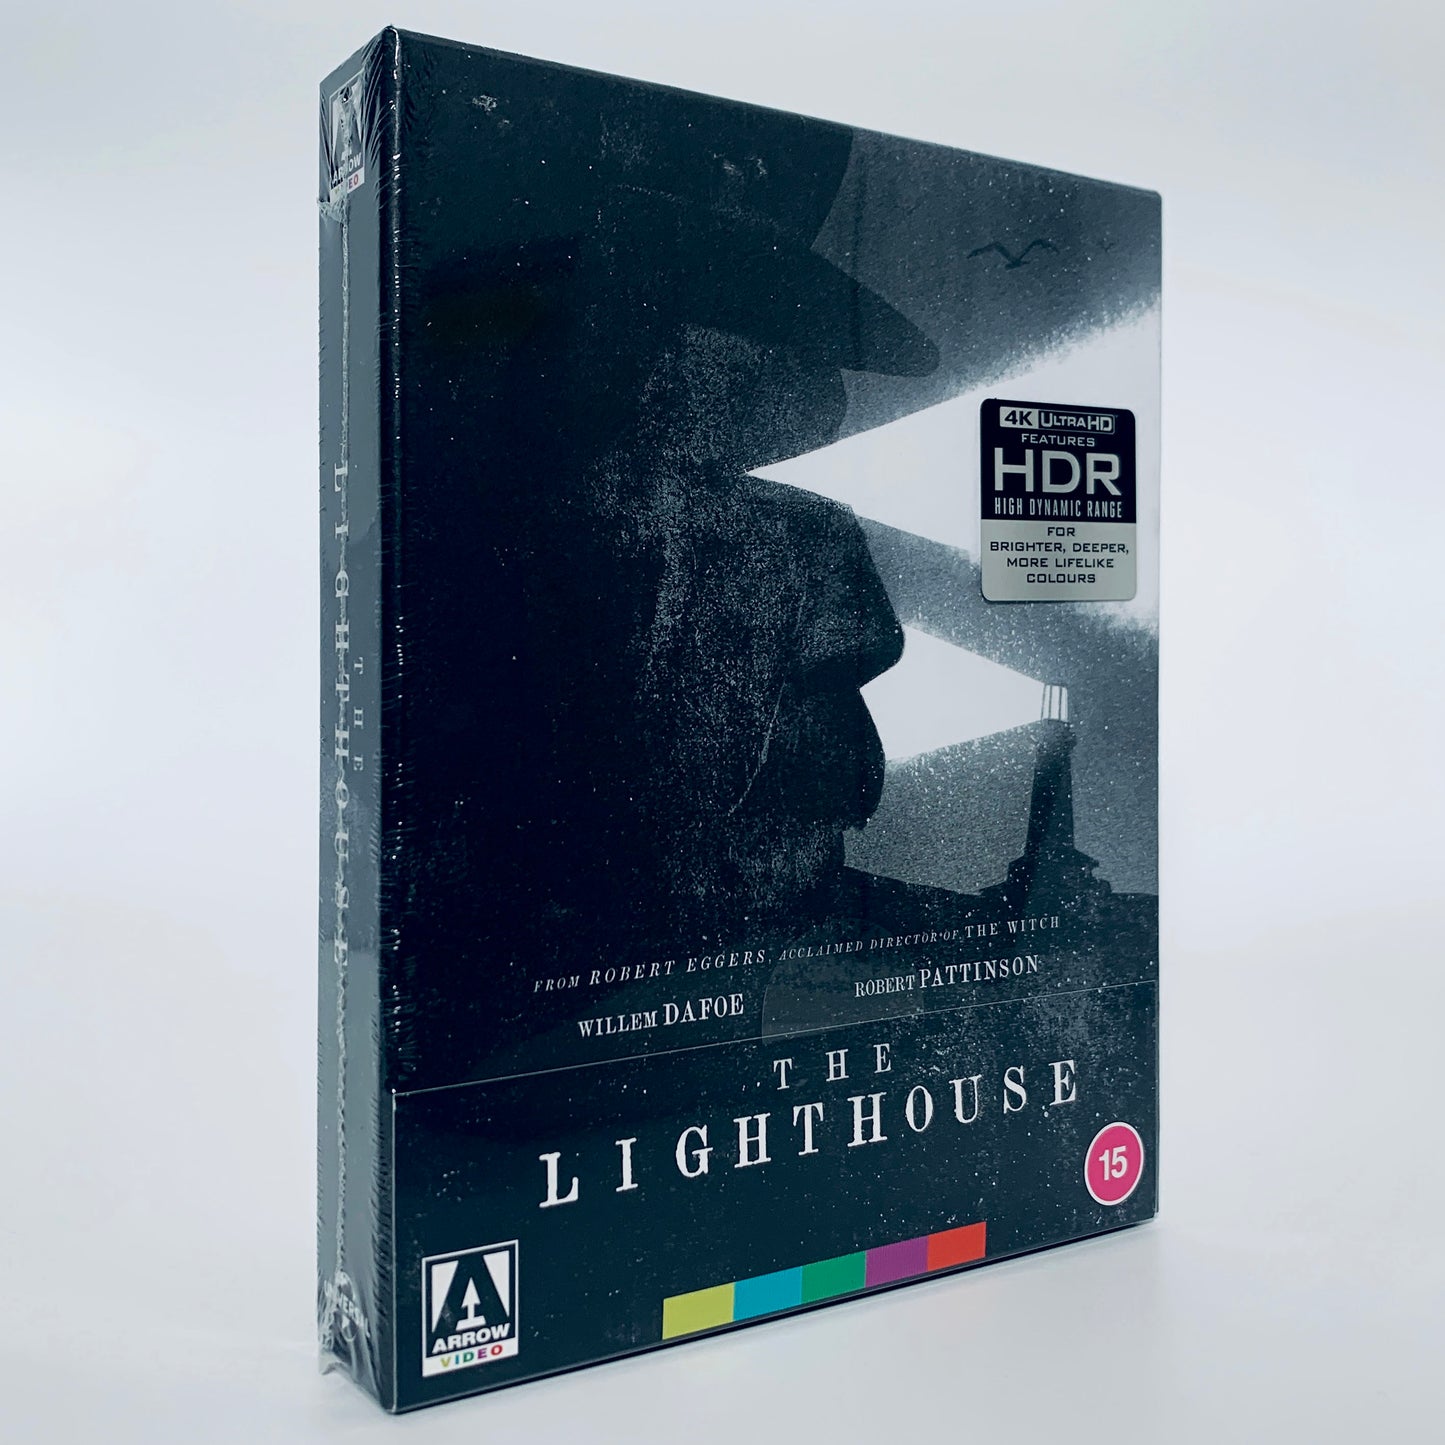 The Lighthouse Limited UHD 4K Arrow Films Ultra HD Blu-ray UK Willem Dafoe Light House Robert Pattinson Robert Eggers